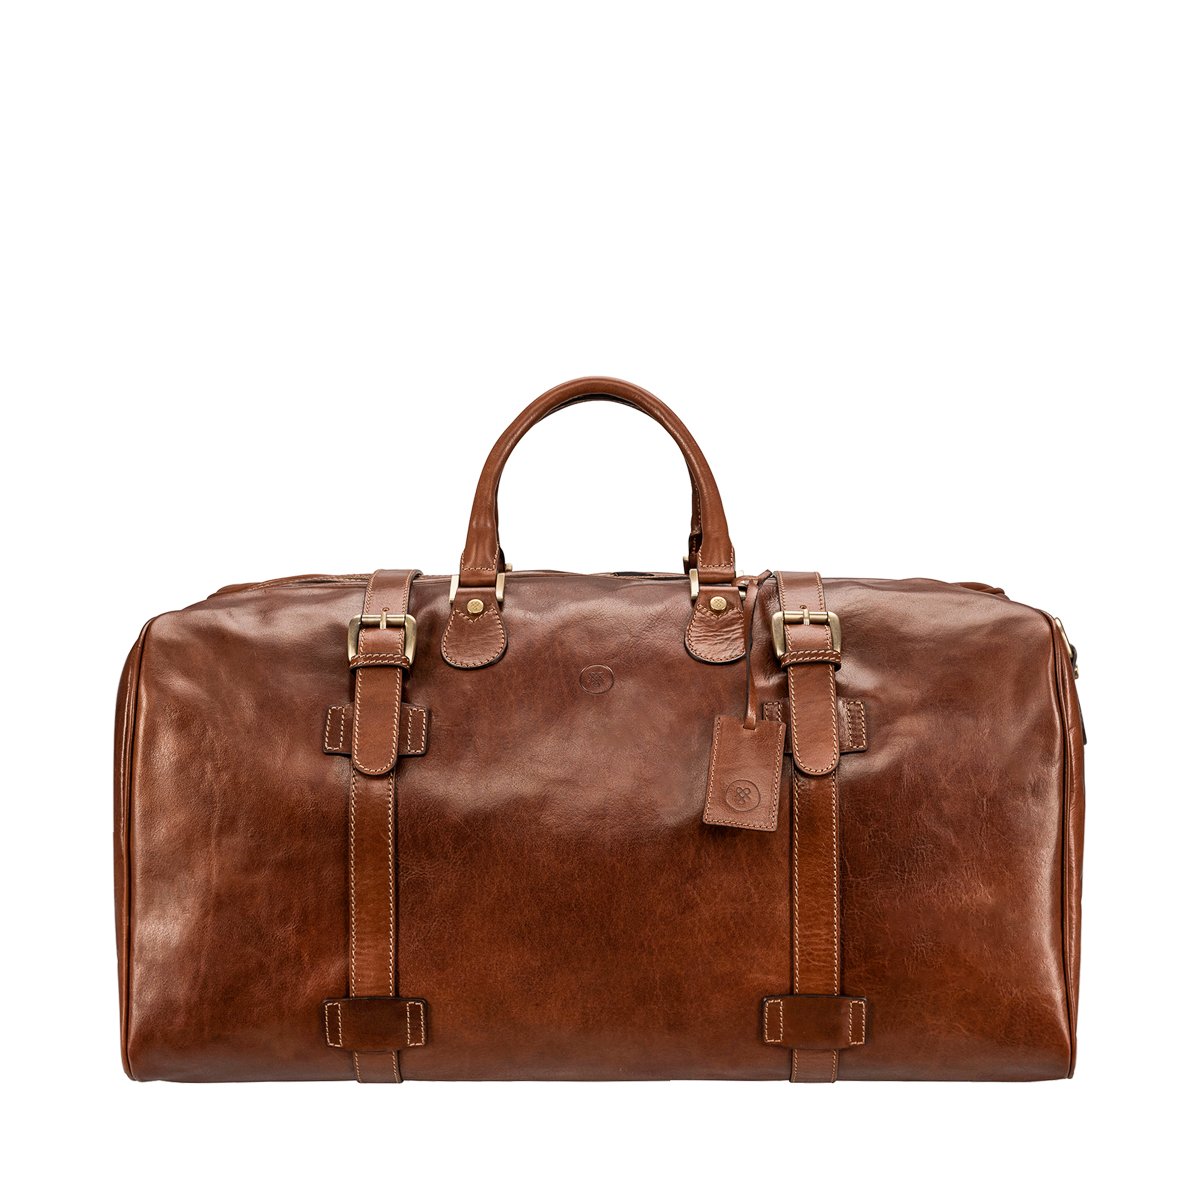 Extra Large Leather Travel Bag | The Flero EL | 25-Year Warranty